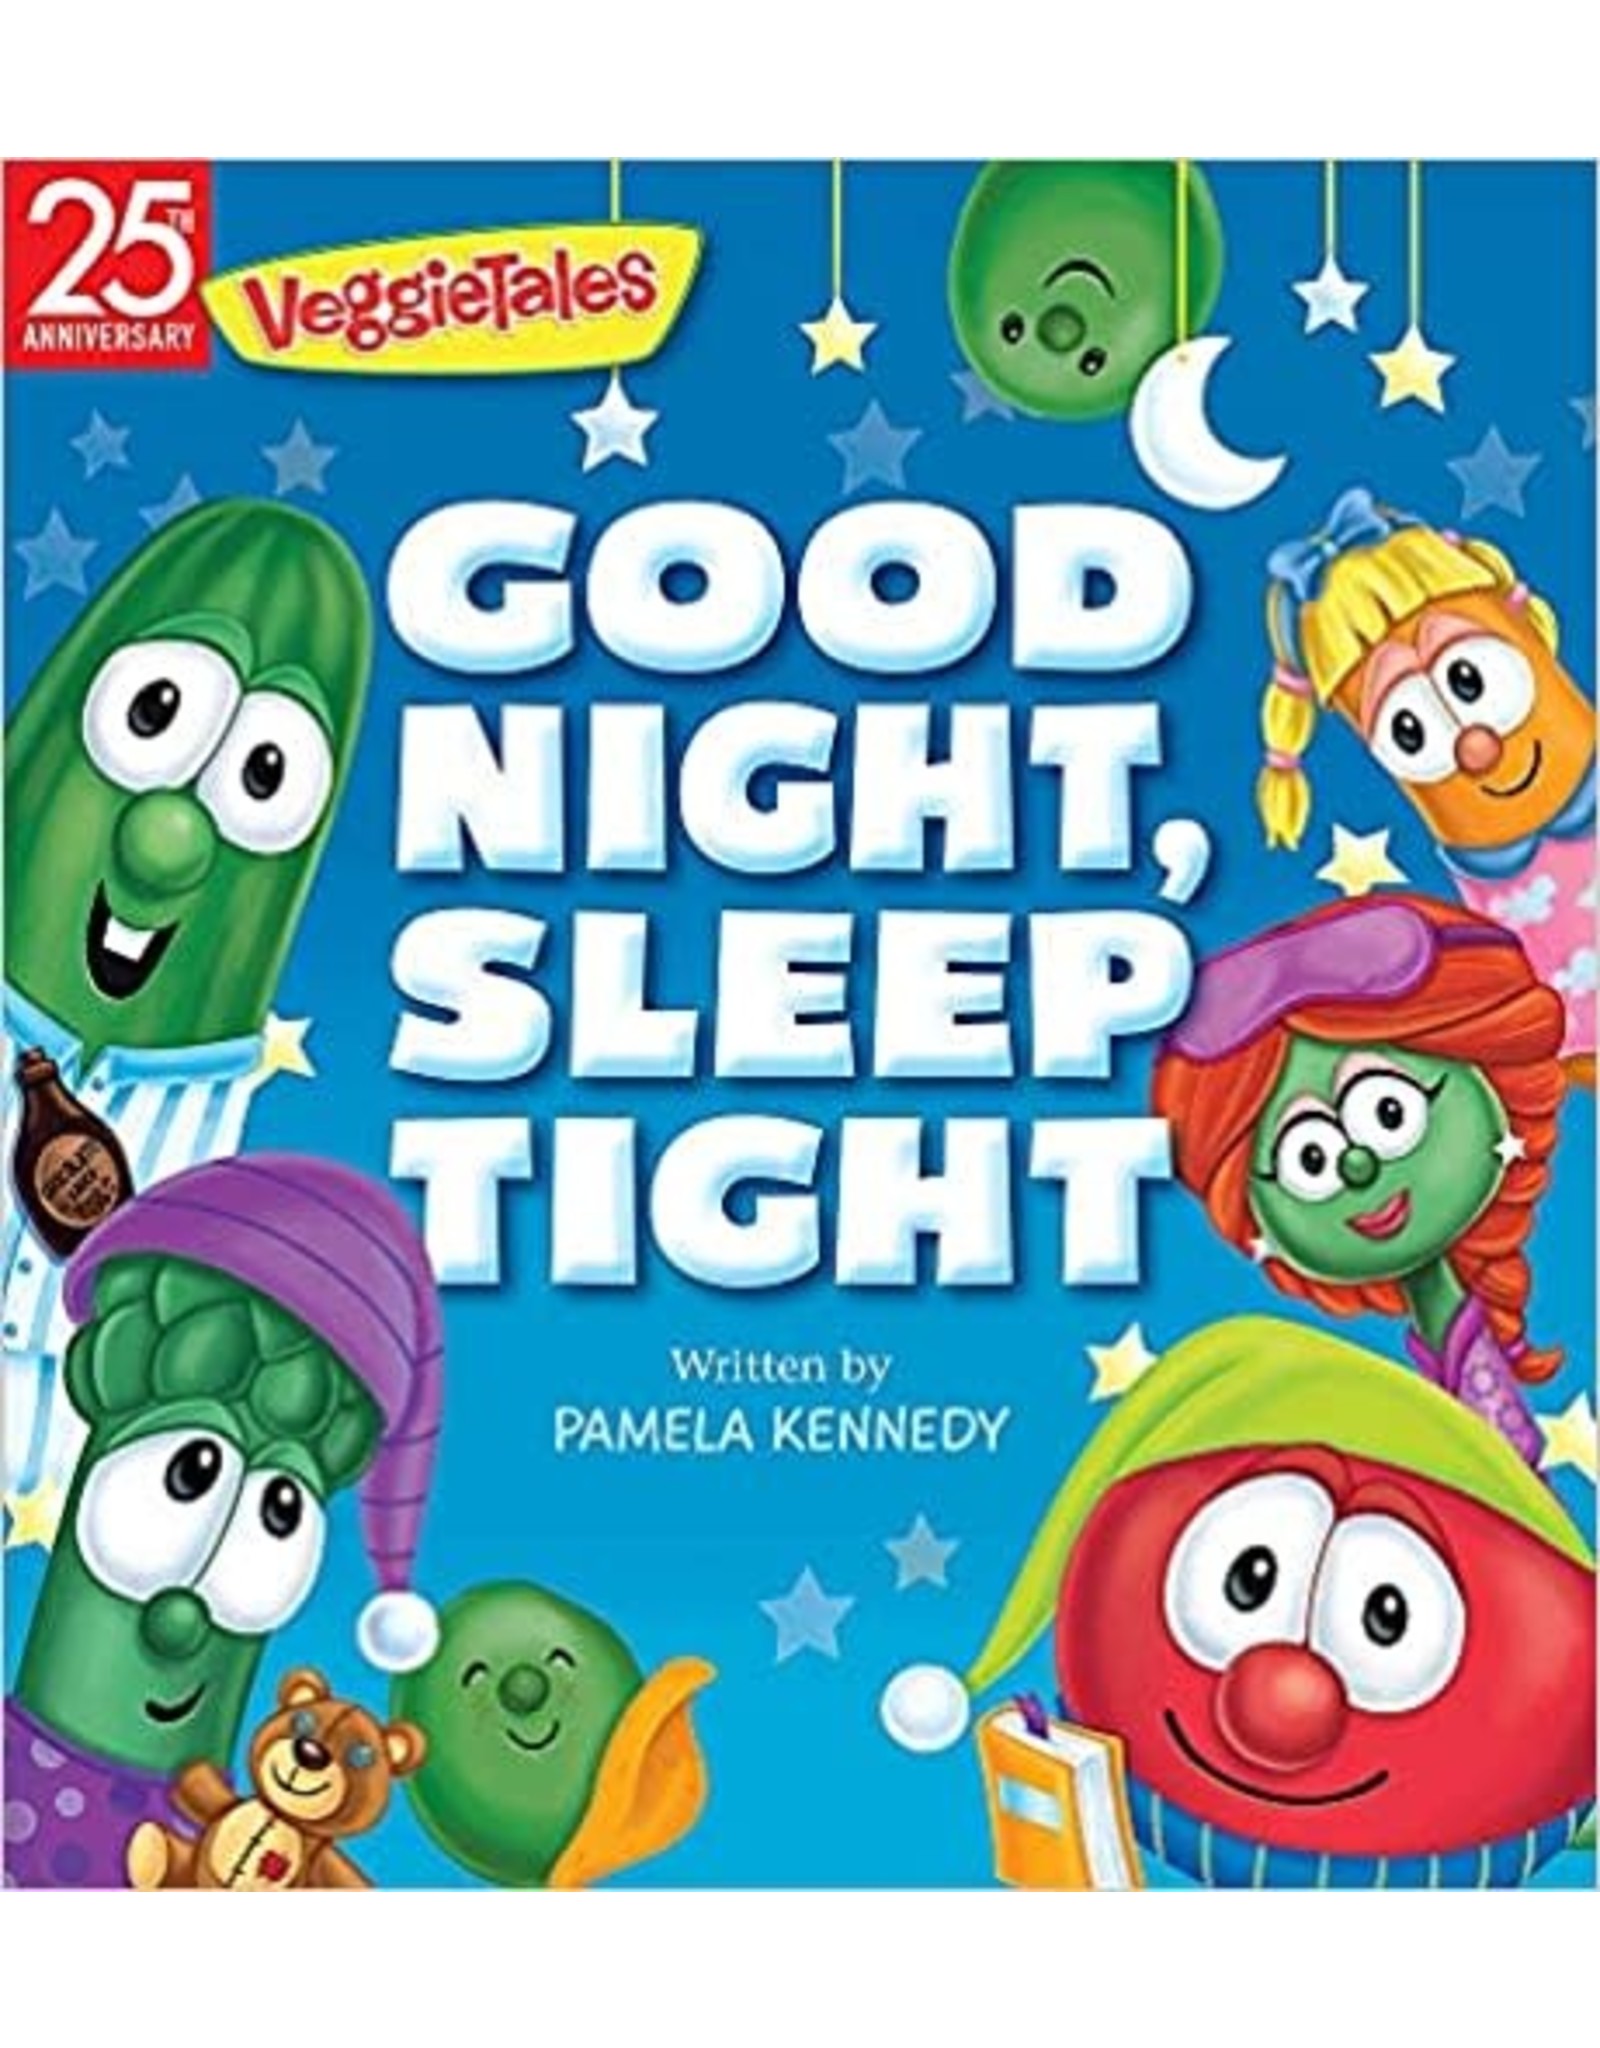 VeggieTales Good Night Sleep Tight by Pamela Kennedy (Hardcover Board Book)